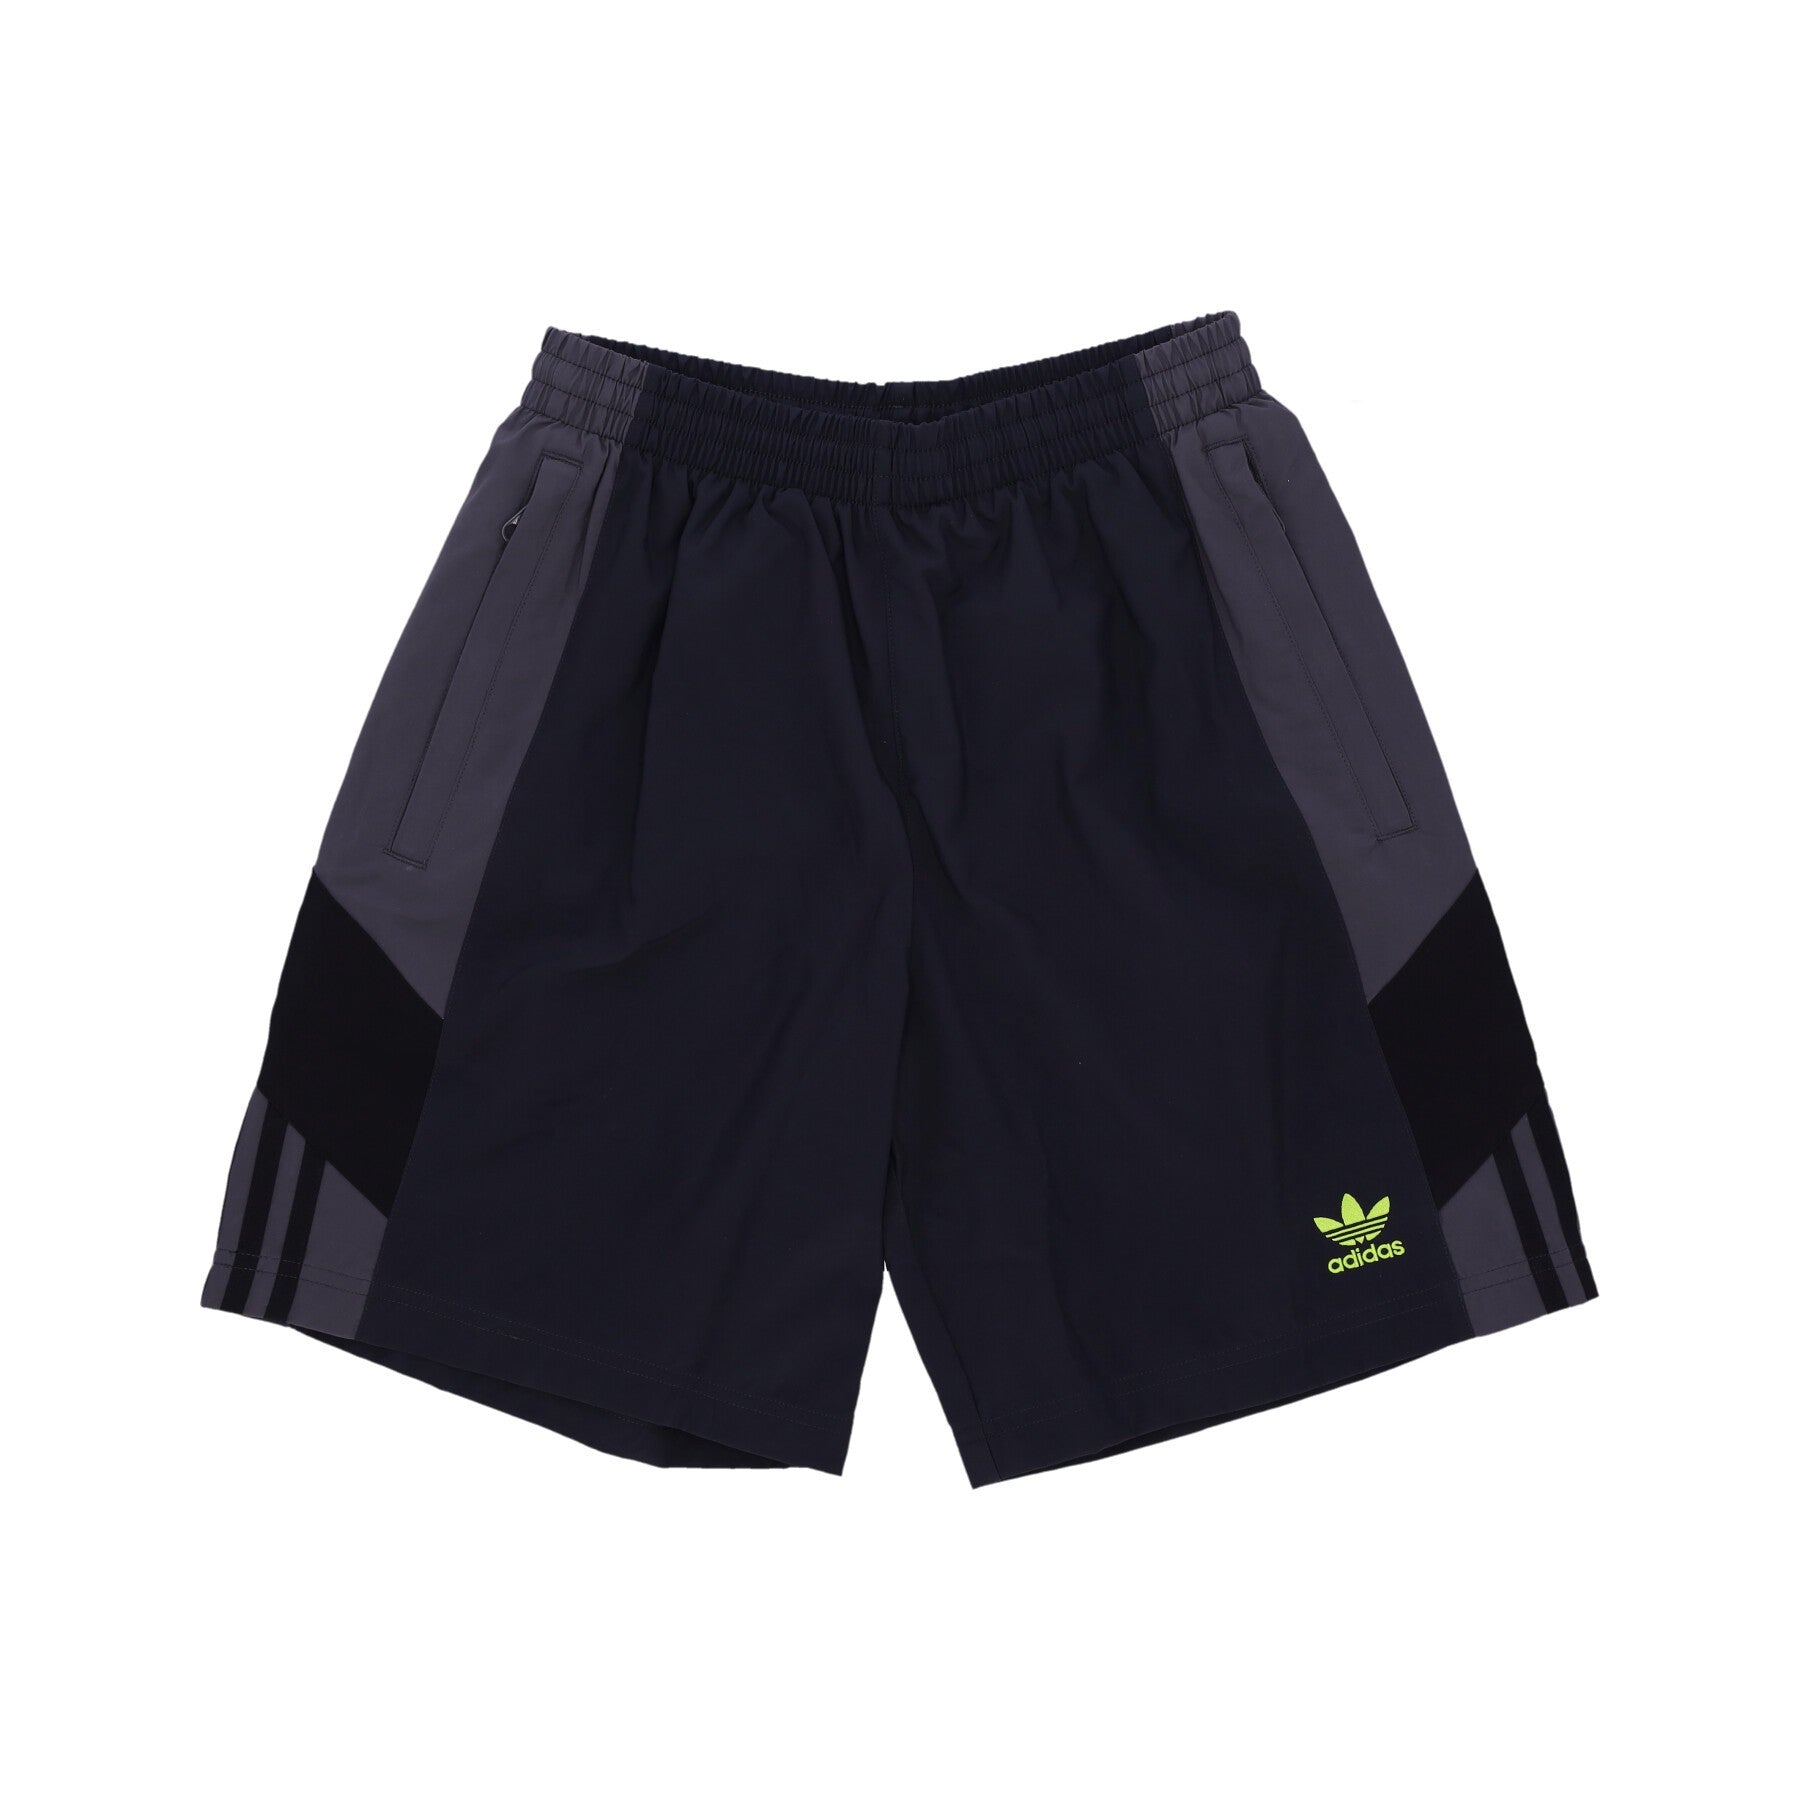 Adidas, Pantaloncino Uomo Rekive Short, Carbon/grey Five